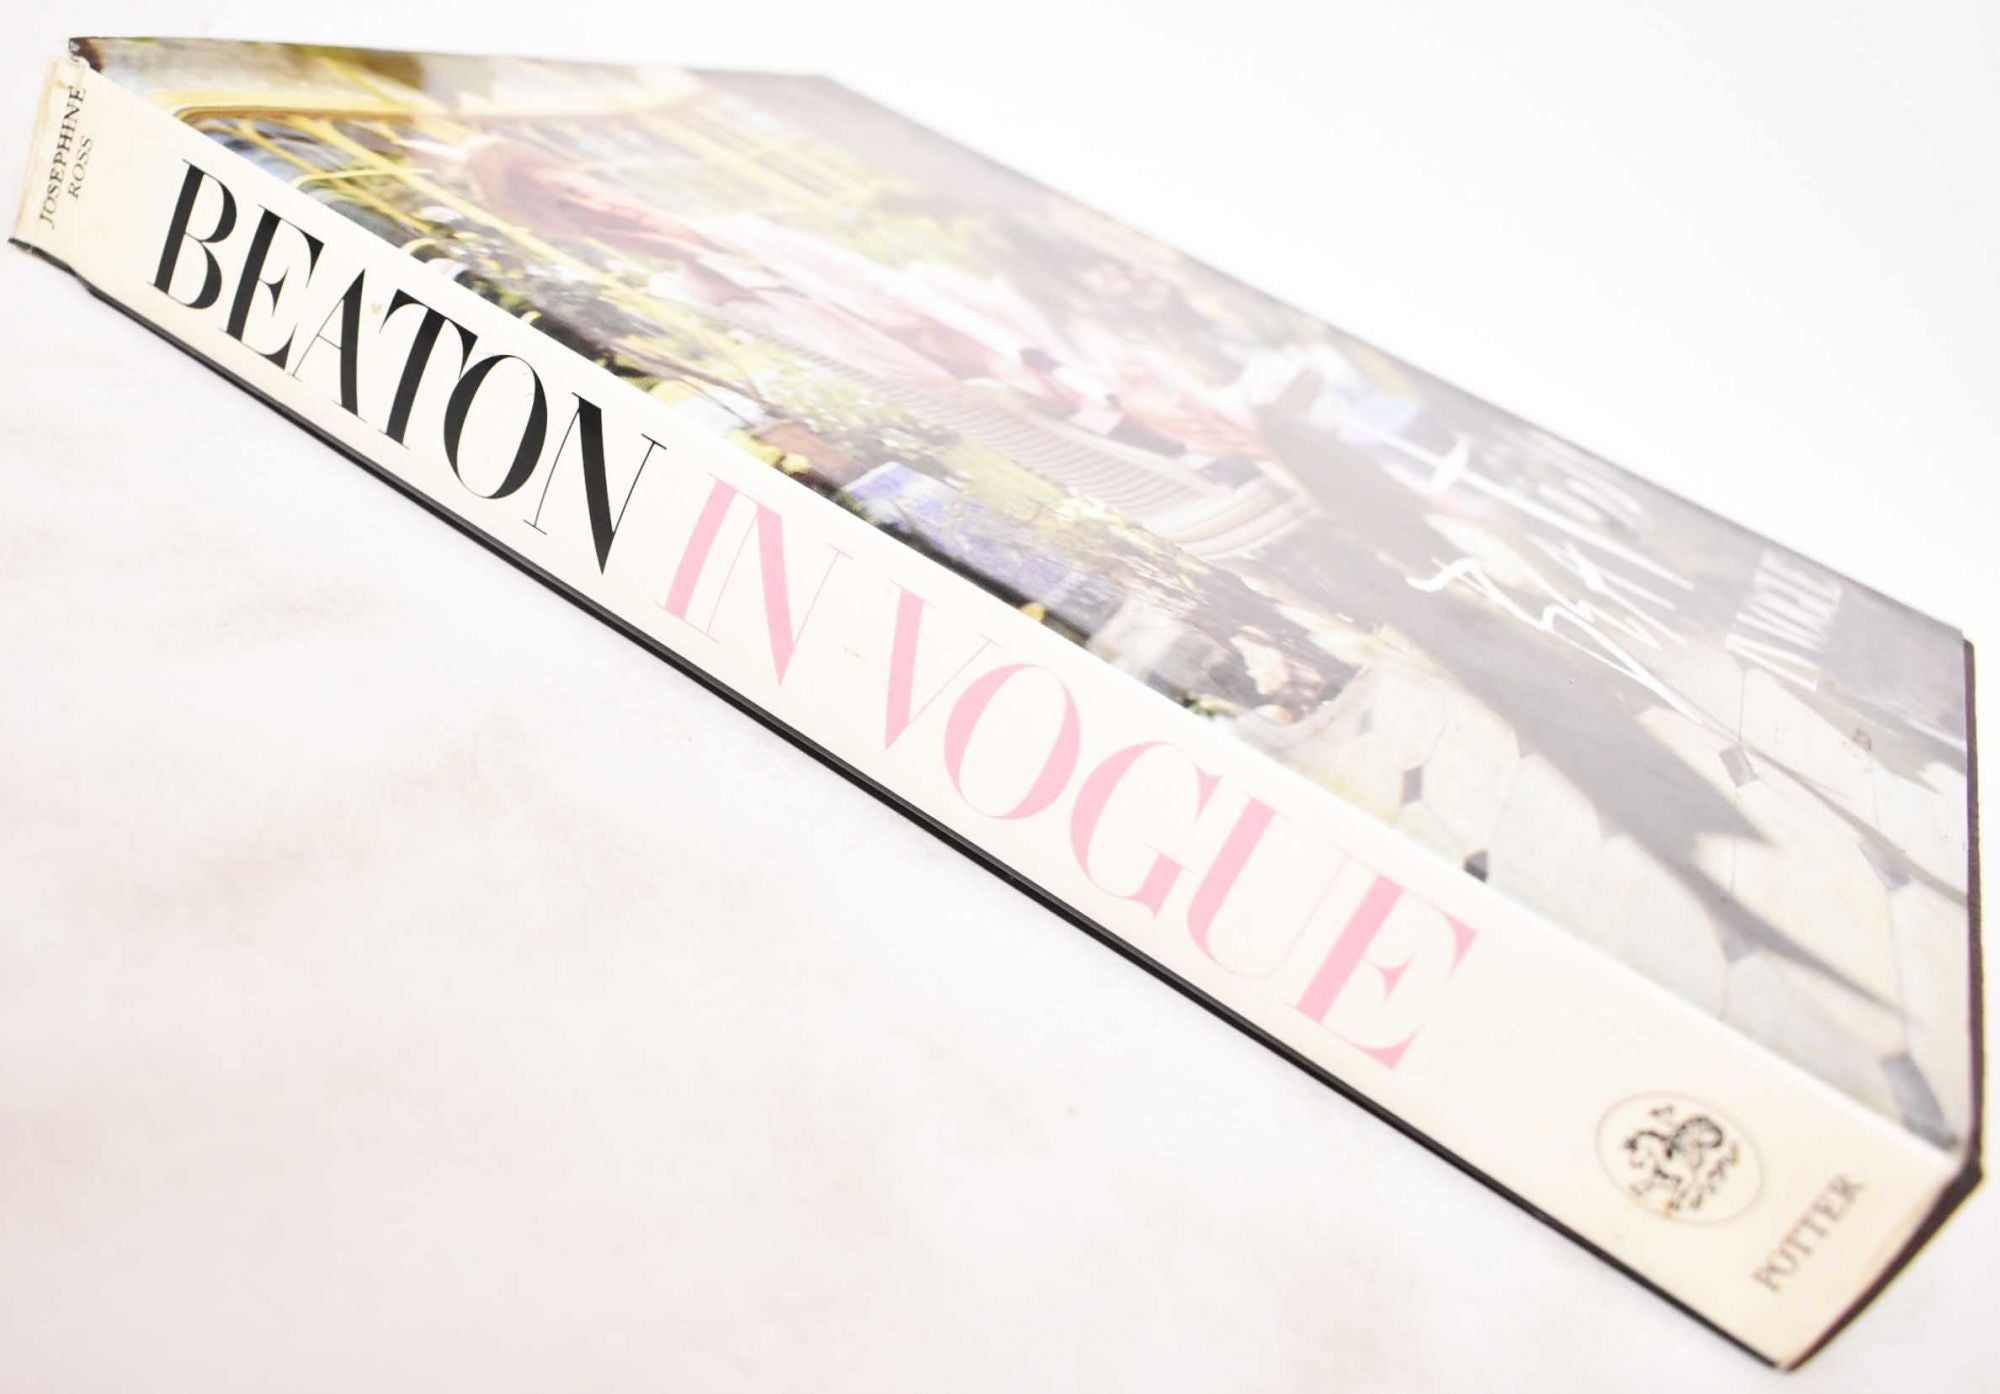 Beaton In Vogue | Josephine Ross